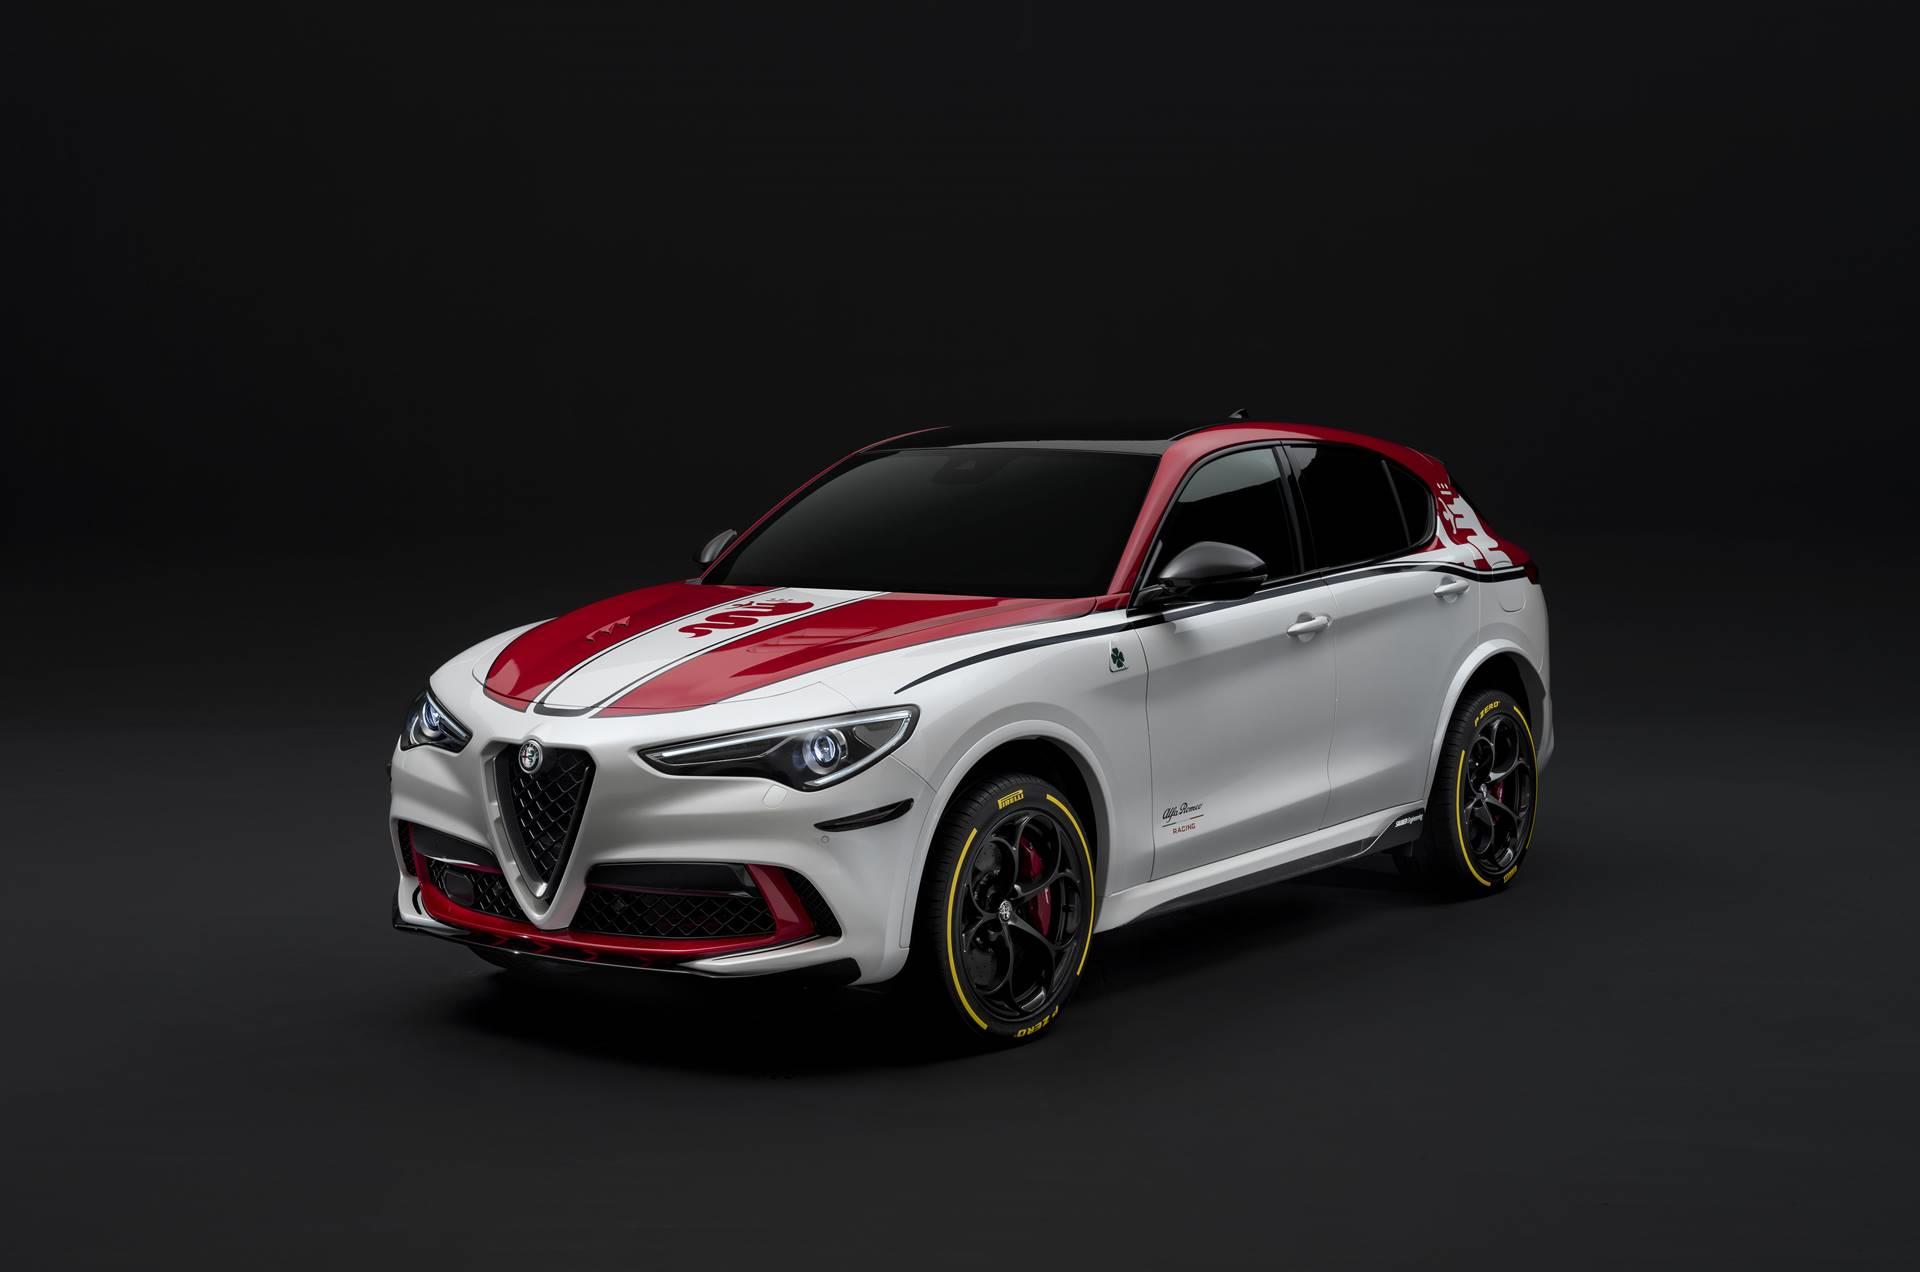 2019 Alfa Romeo Stelvio Quadrifoglio Racing Limited Edition